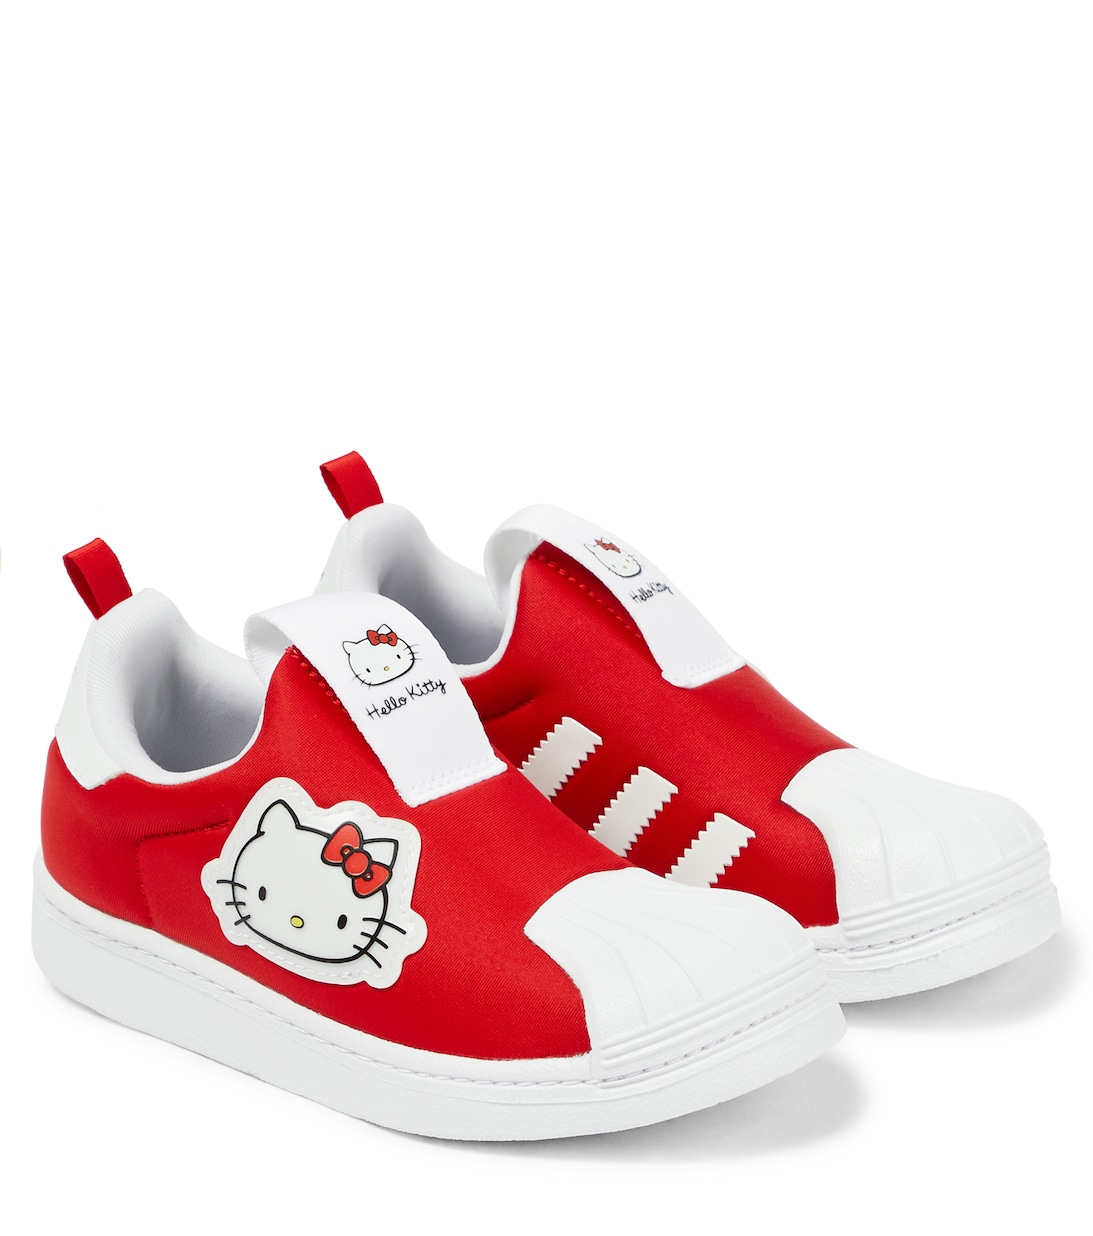 Кроссовки Superstar Adidas Originals, белый кроссовки adidas originals superstar her icons bball w облачно белый солнечно красный